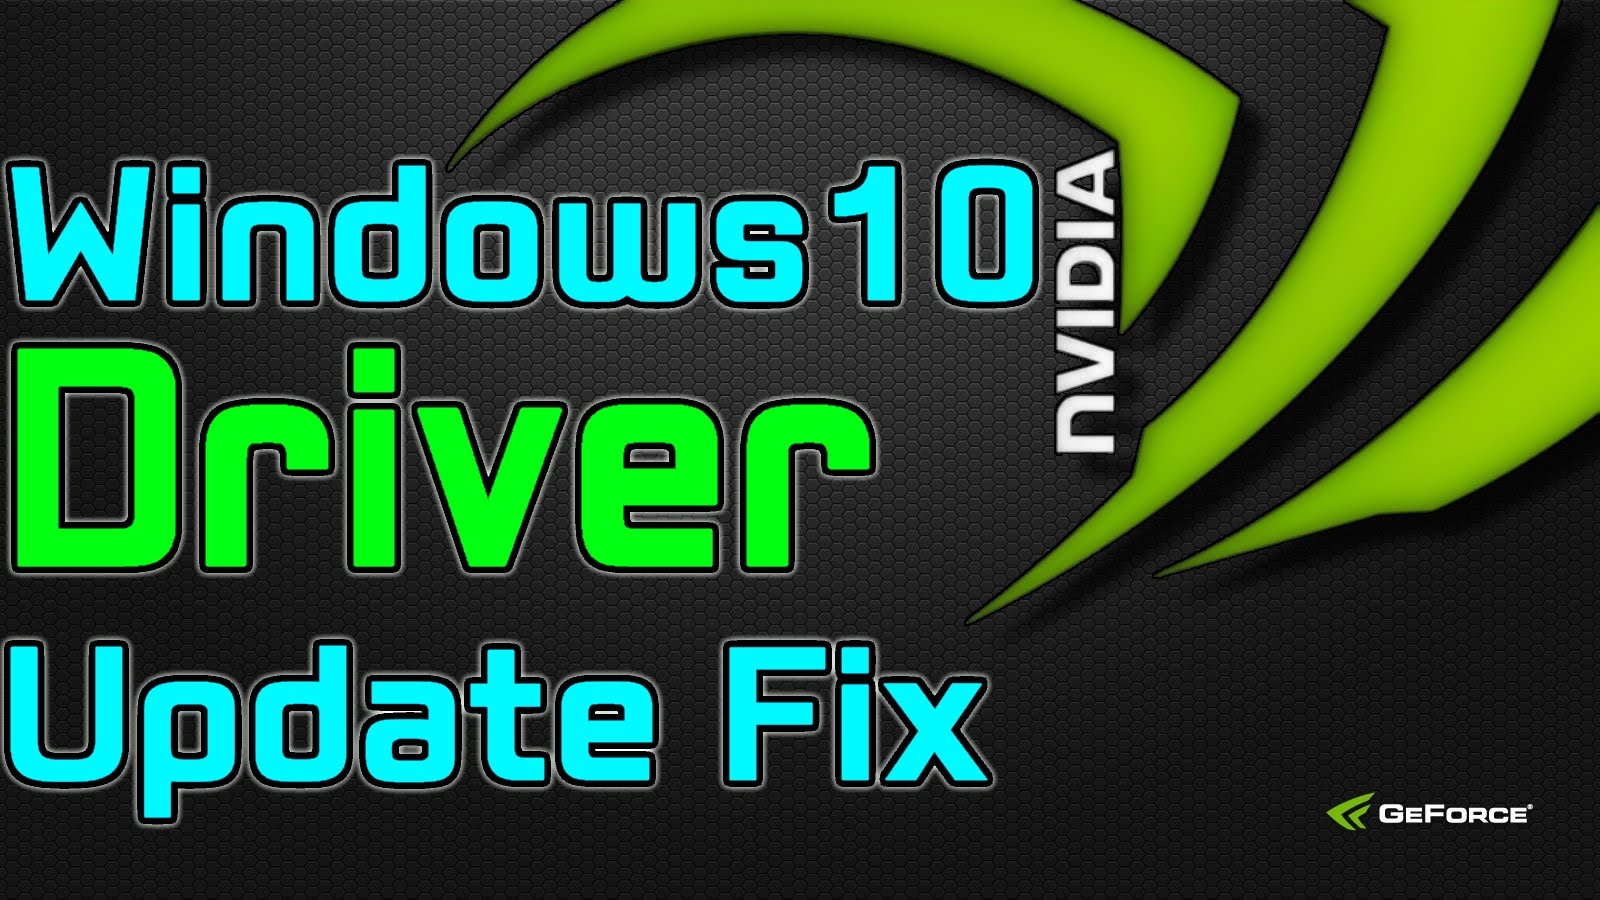 nvidia driver for mac 10.12.6